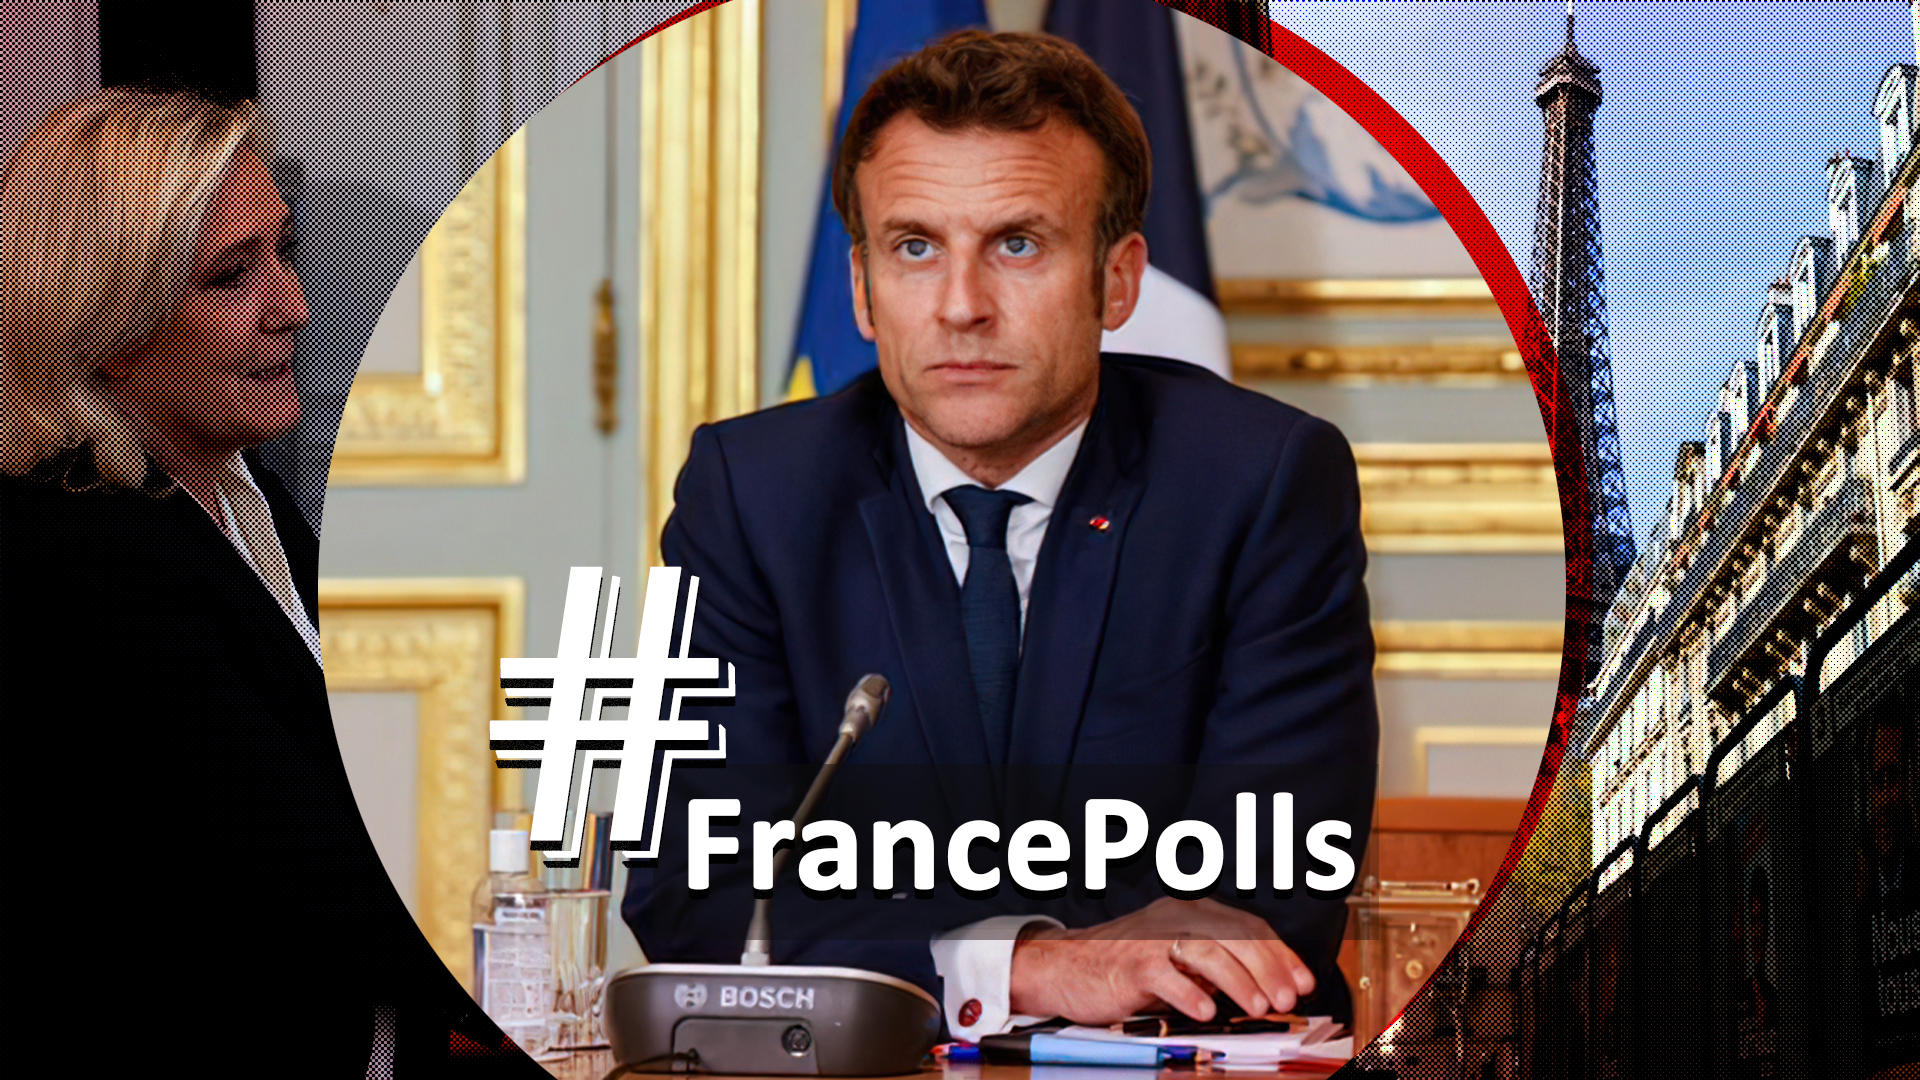 #FrancePolls